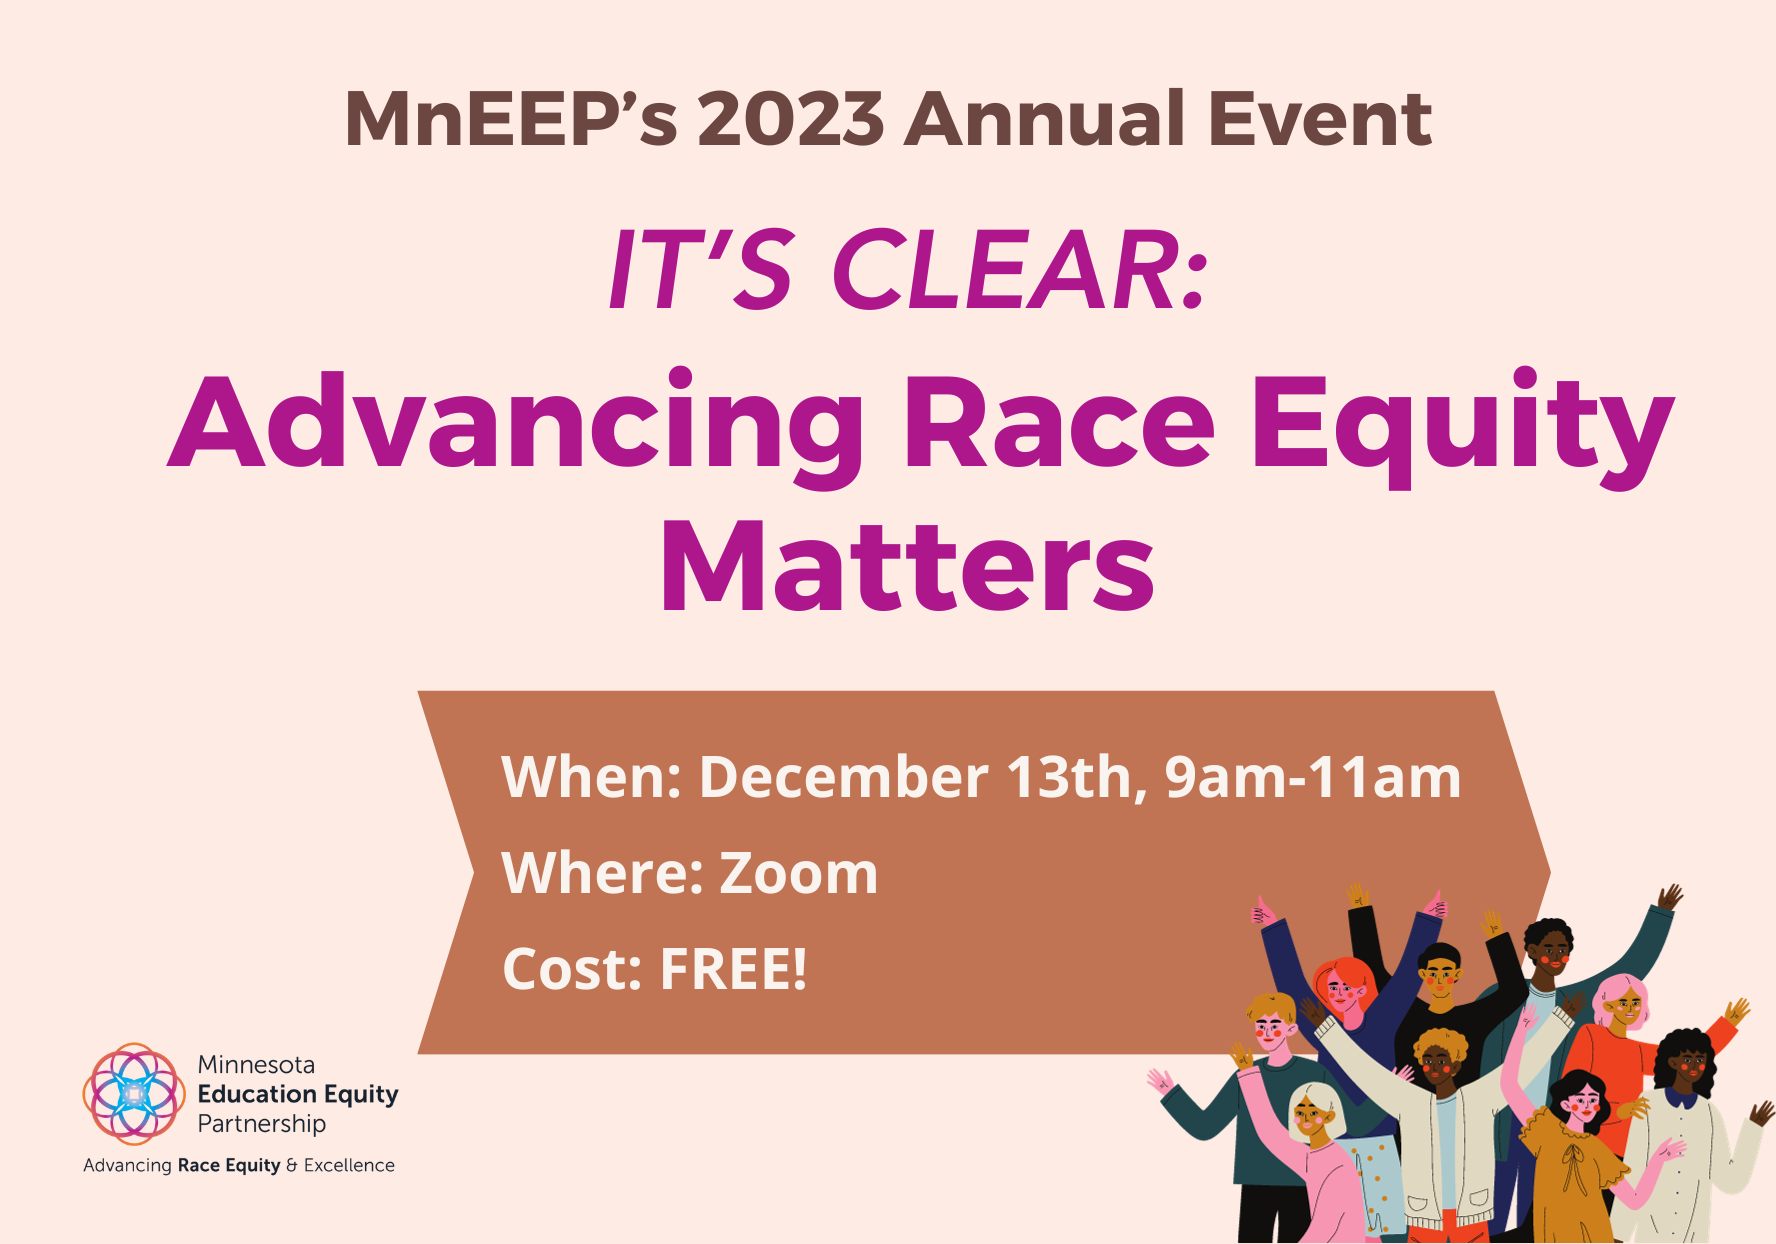 MnEEP 2023 Annual Event: Wednesday, December 13